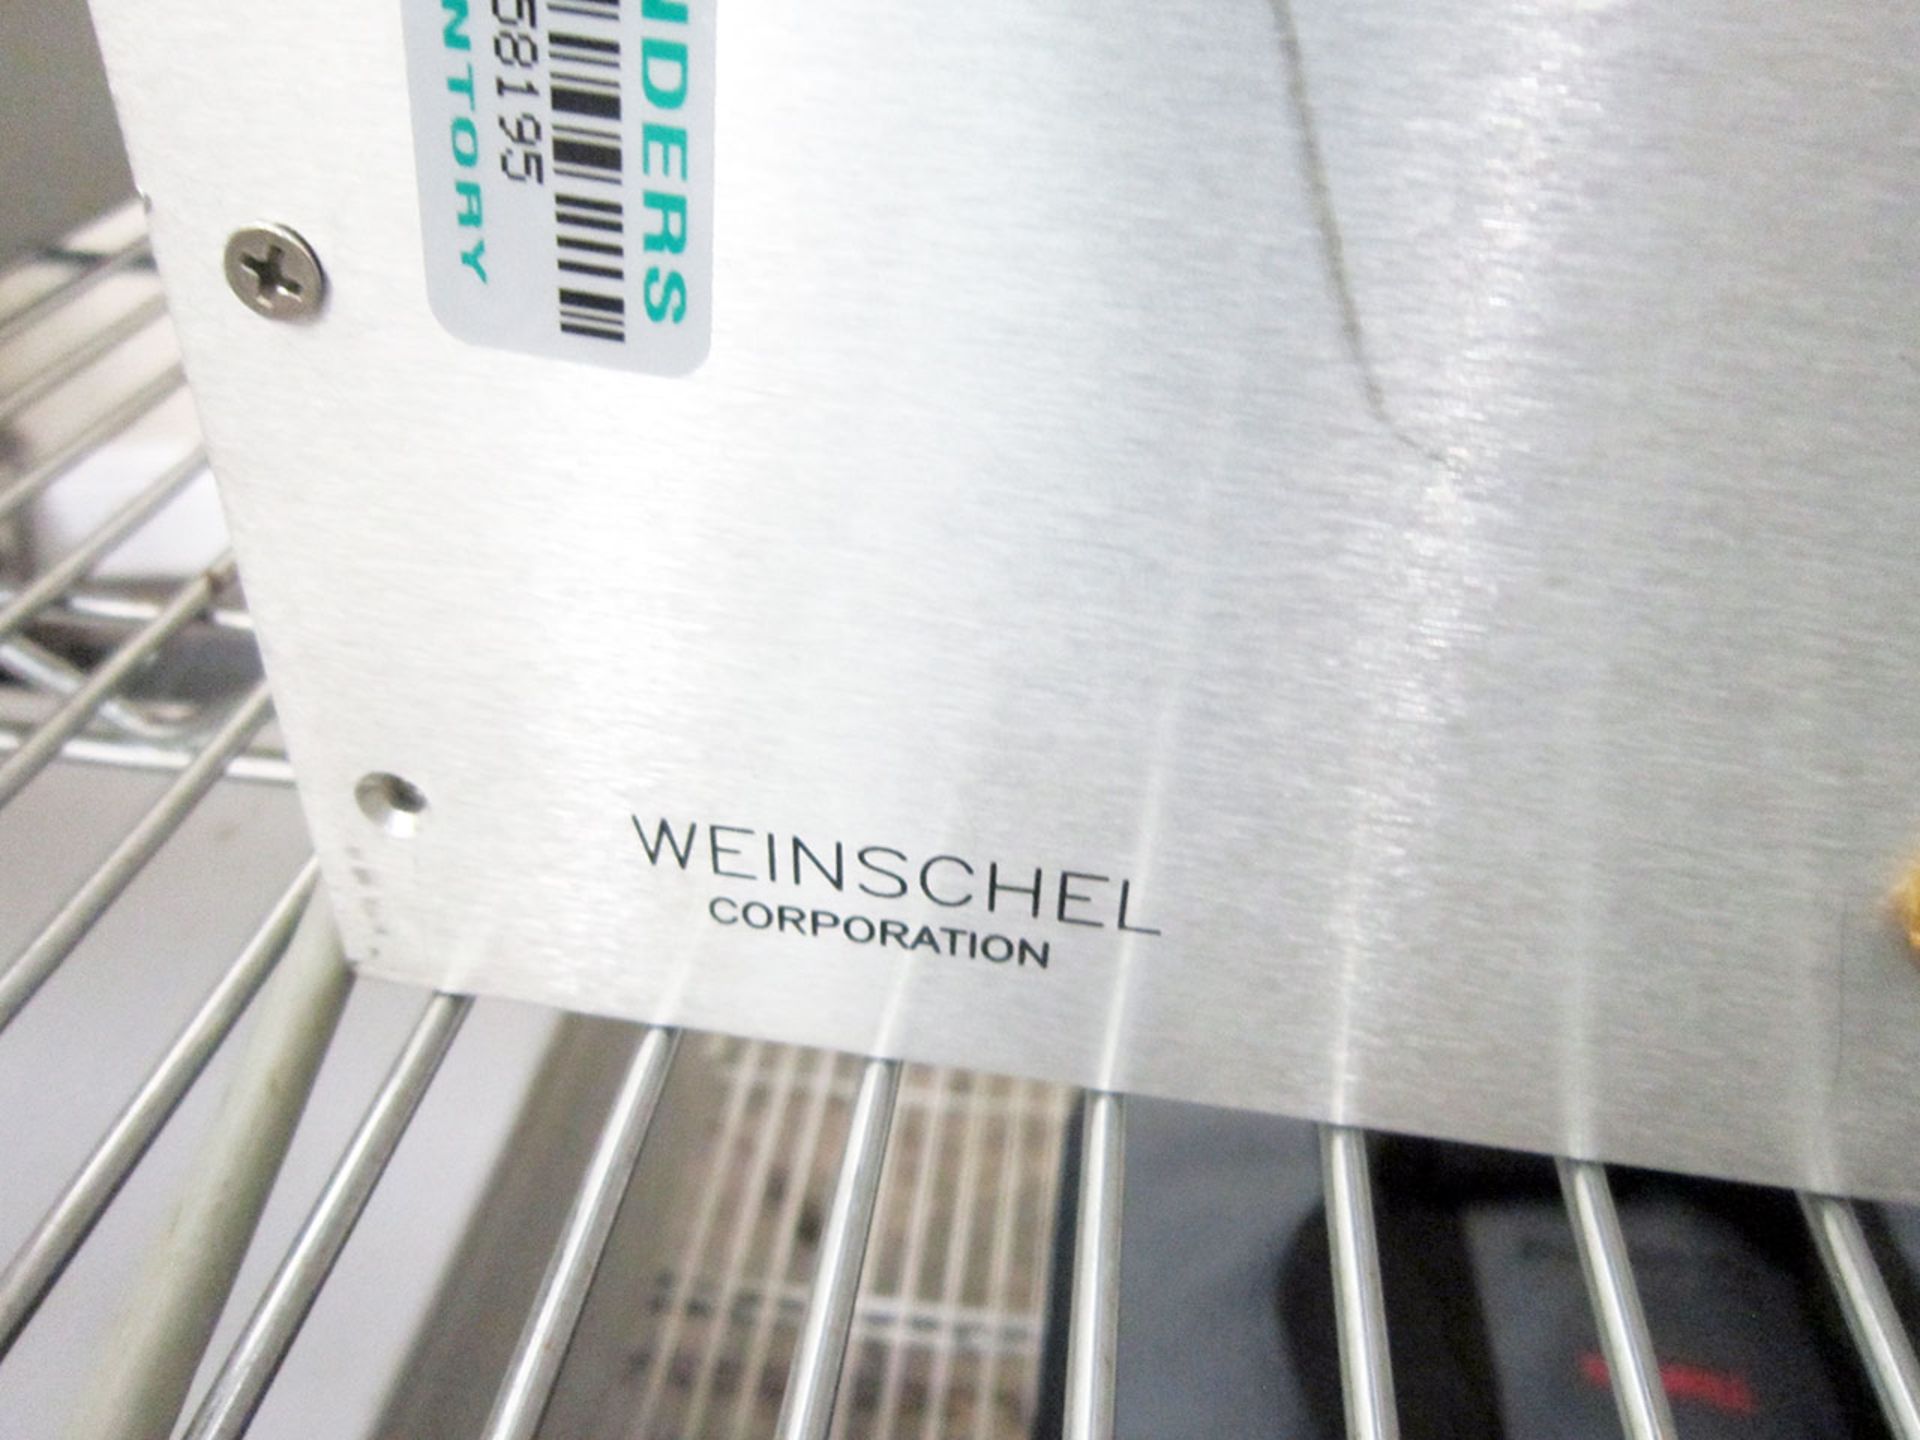 Weinschel Corporation 6341-2 2200 MHz Attenuator - Image 2 of 4